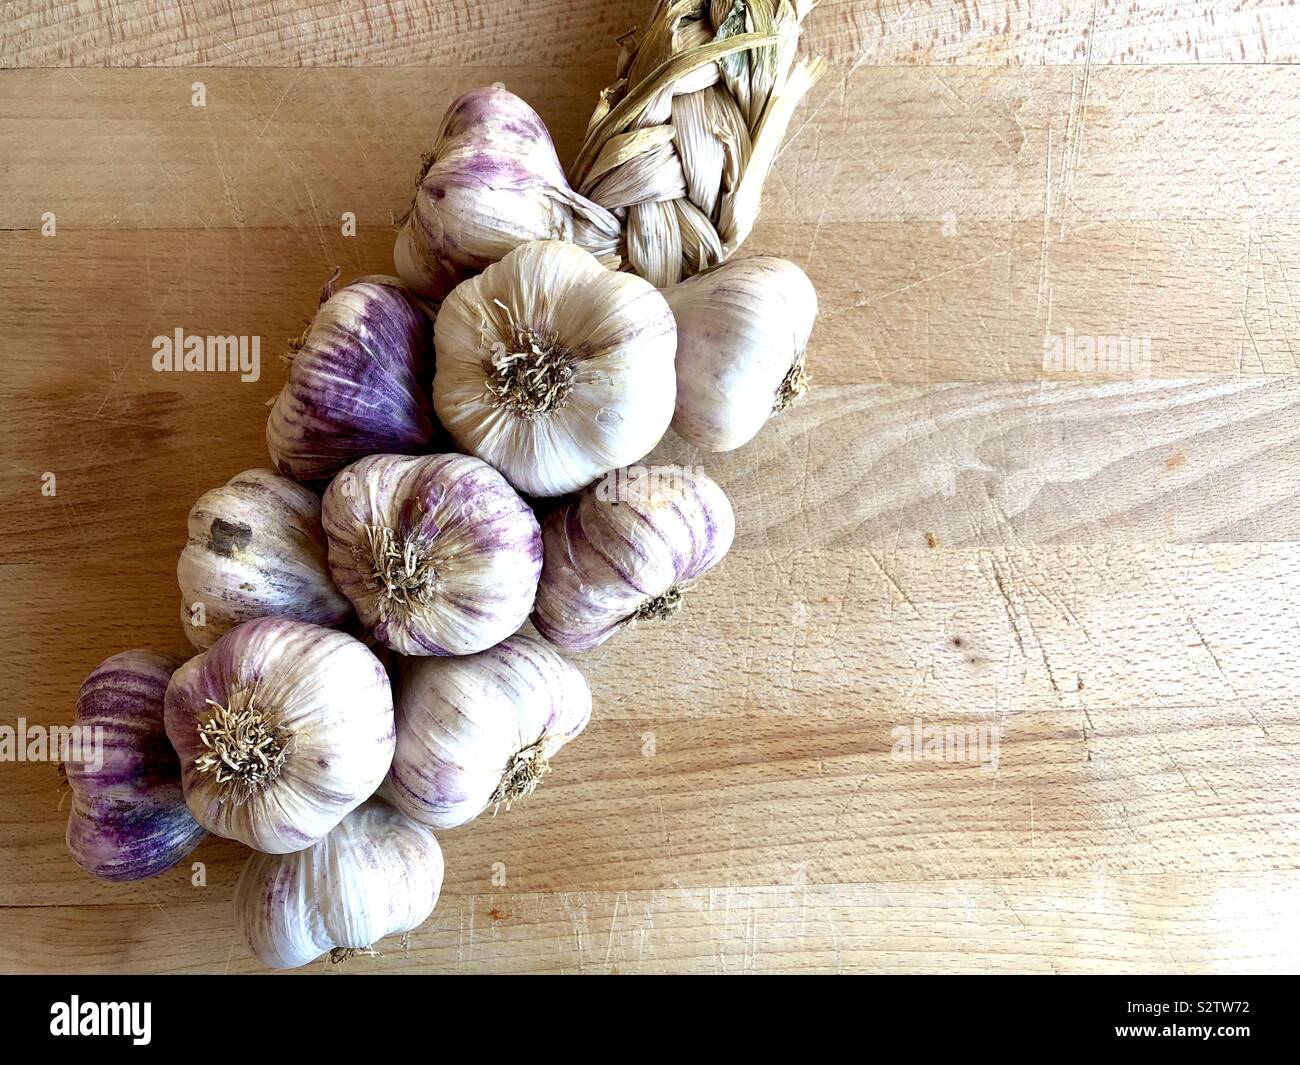 Garlic braid on a wooden background Stock Photo